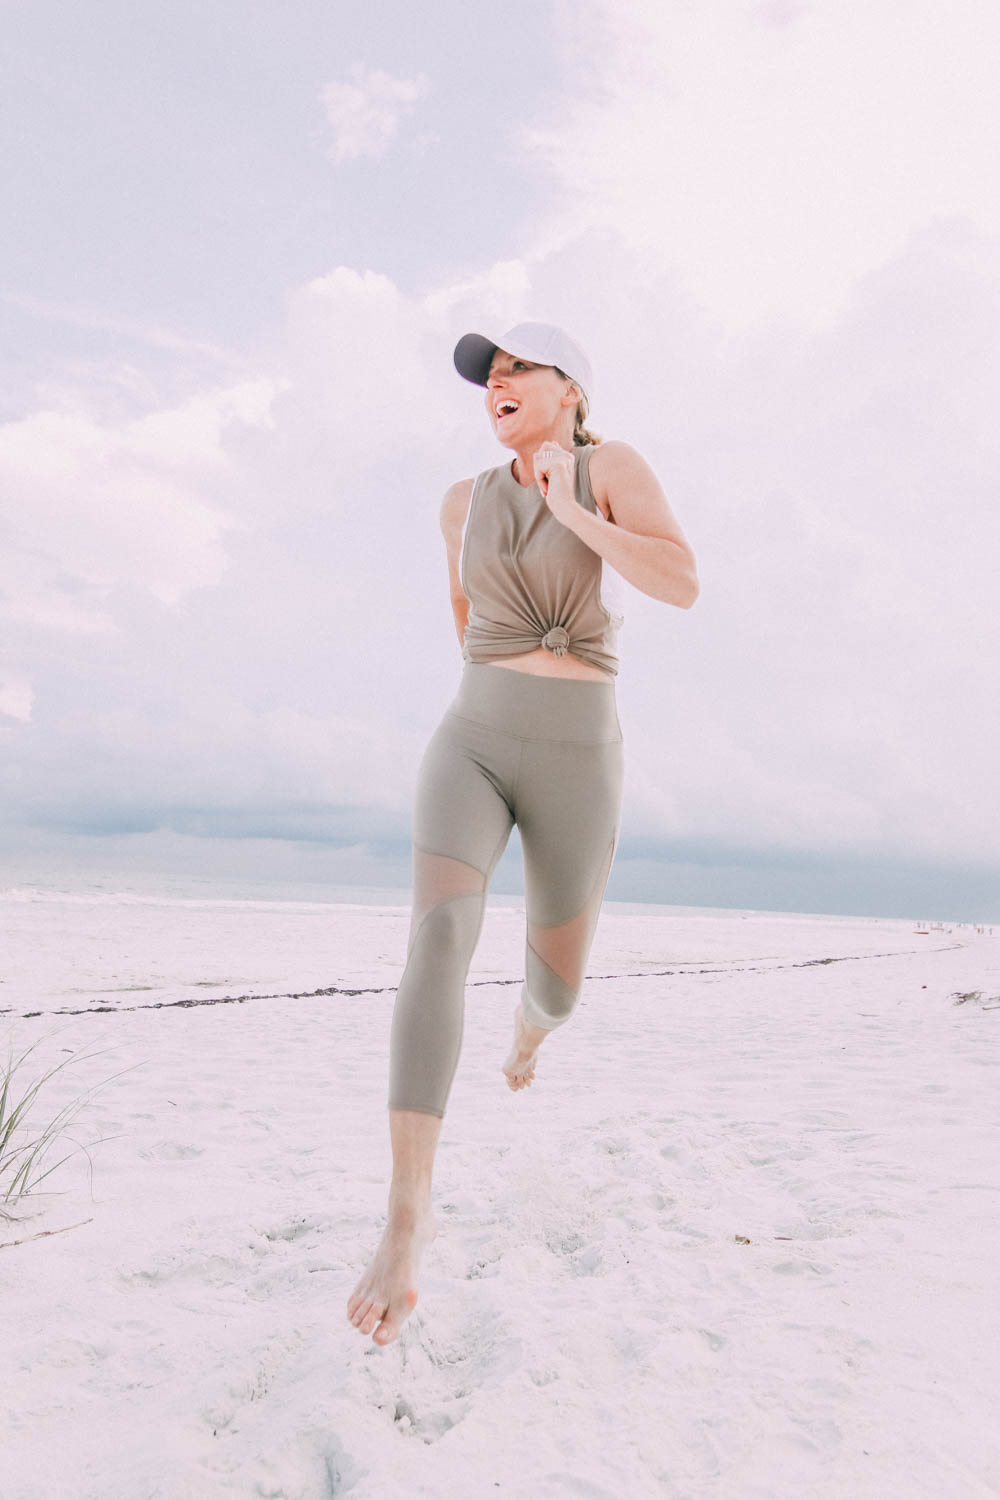 ALO yoga high waist coast capris activewear on fashion blogger busbee style running on beach